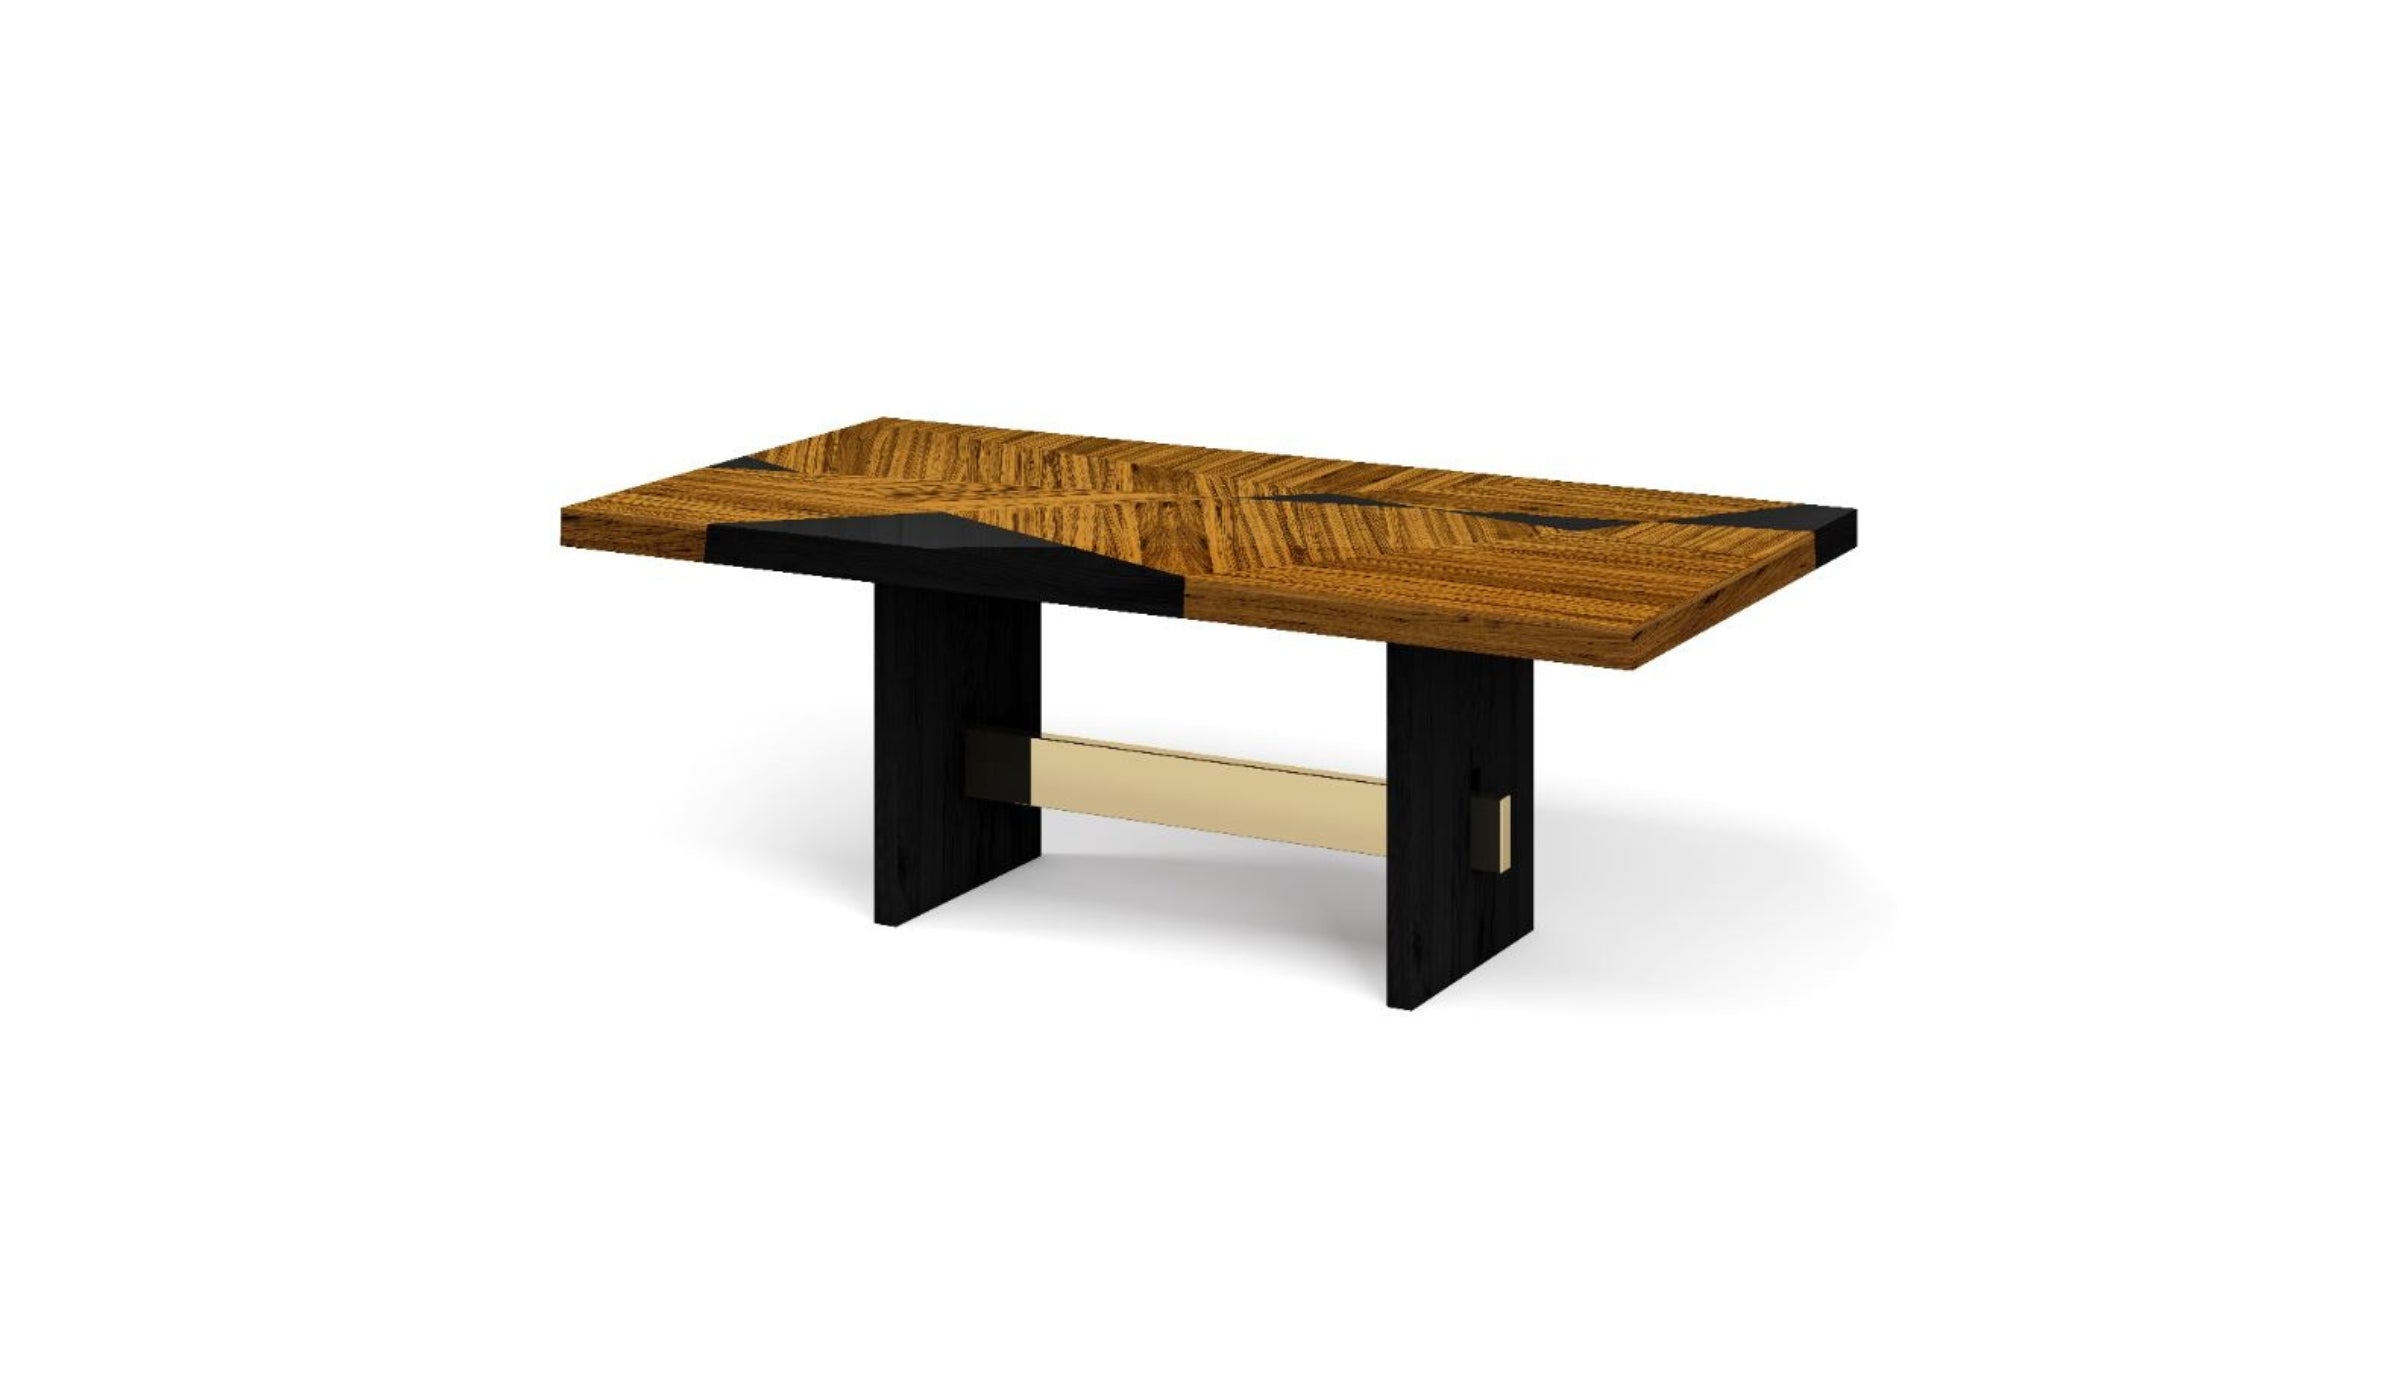 Geometry - Sikomoro wood dining table